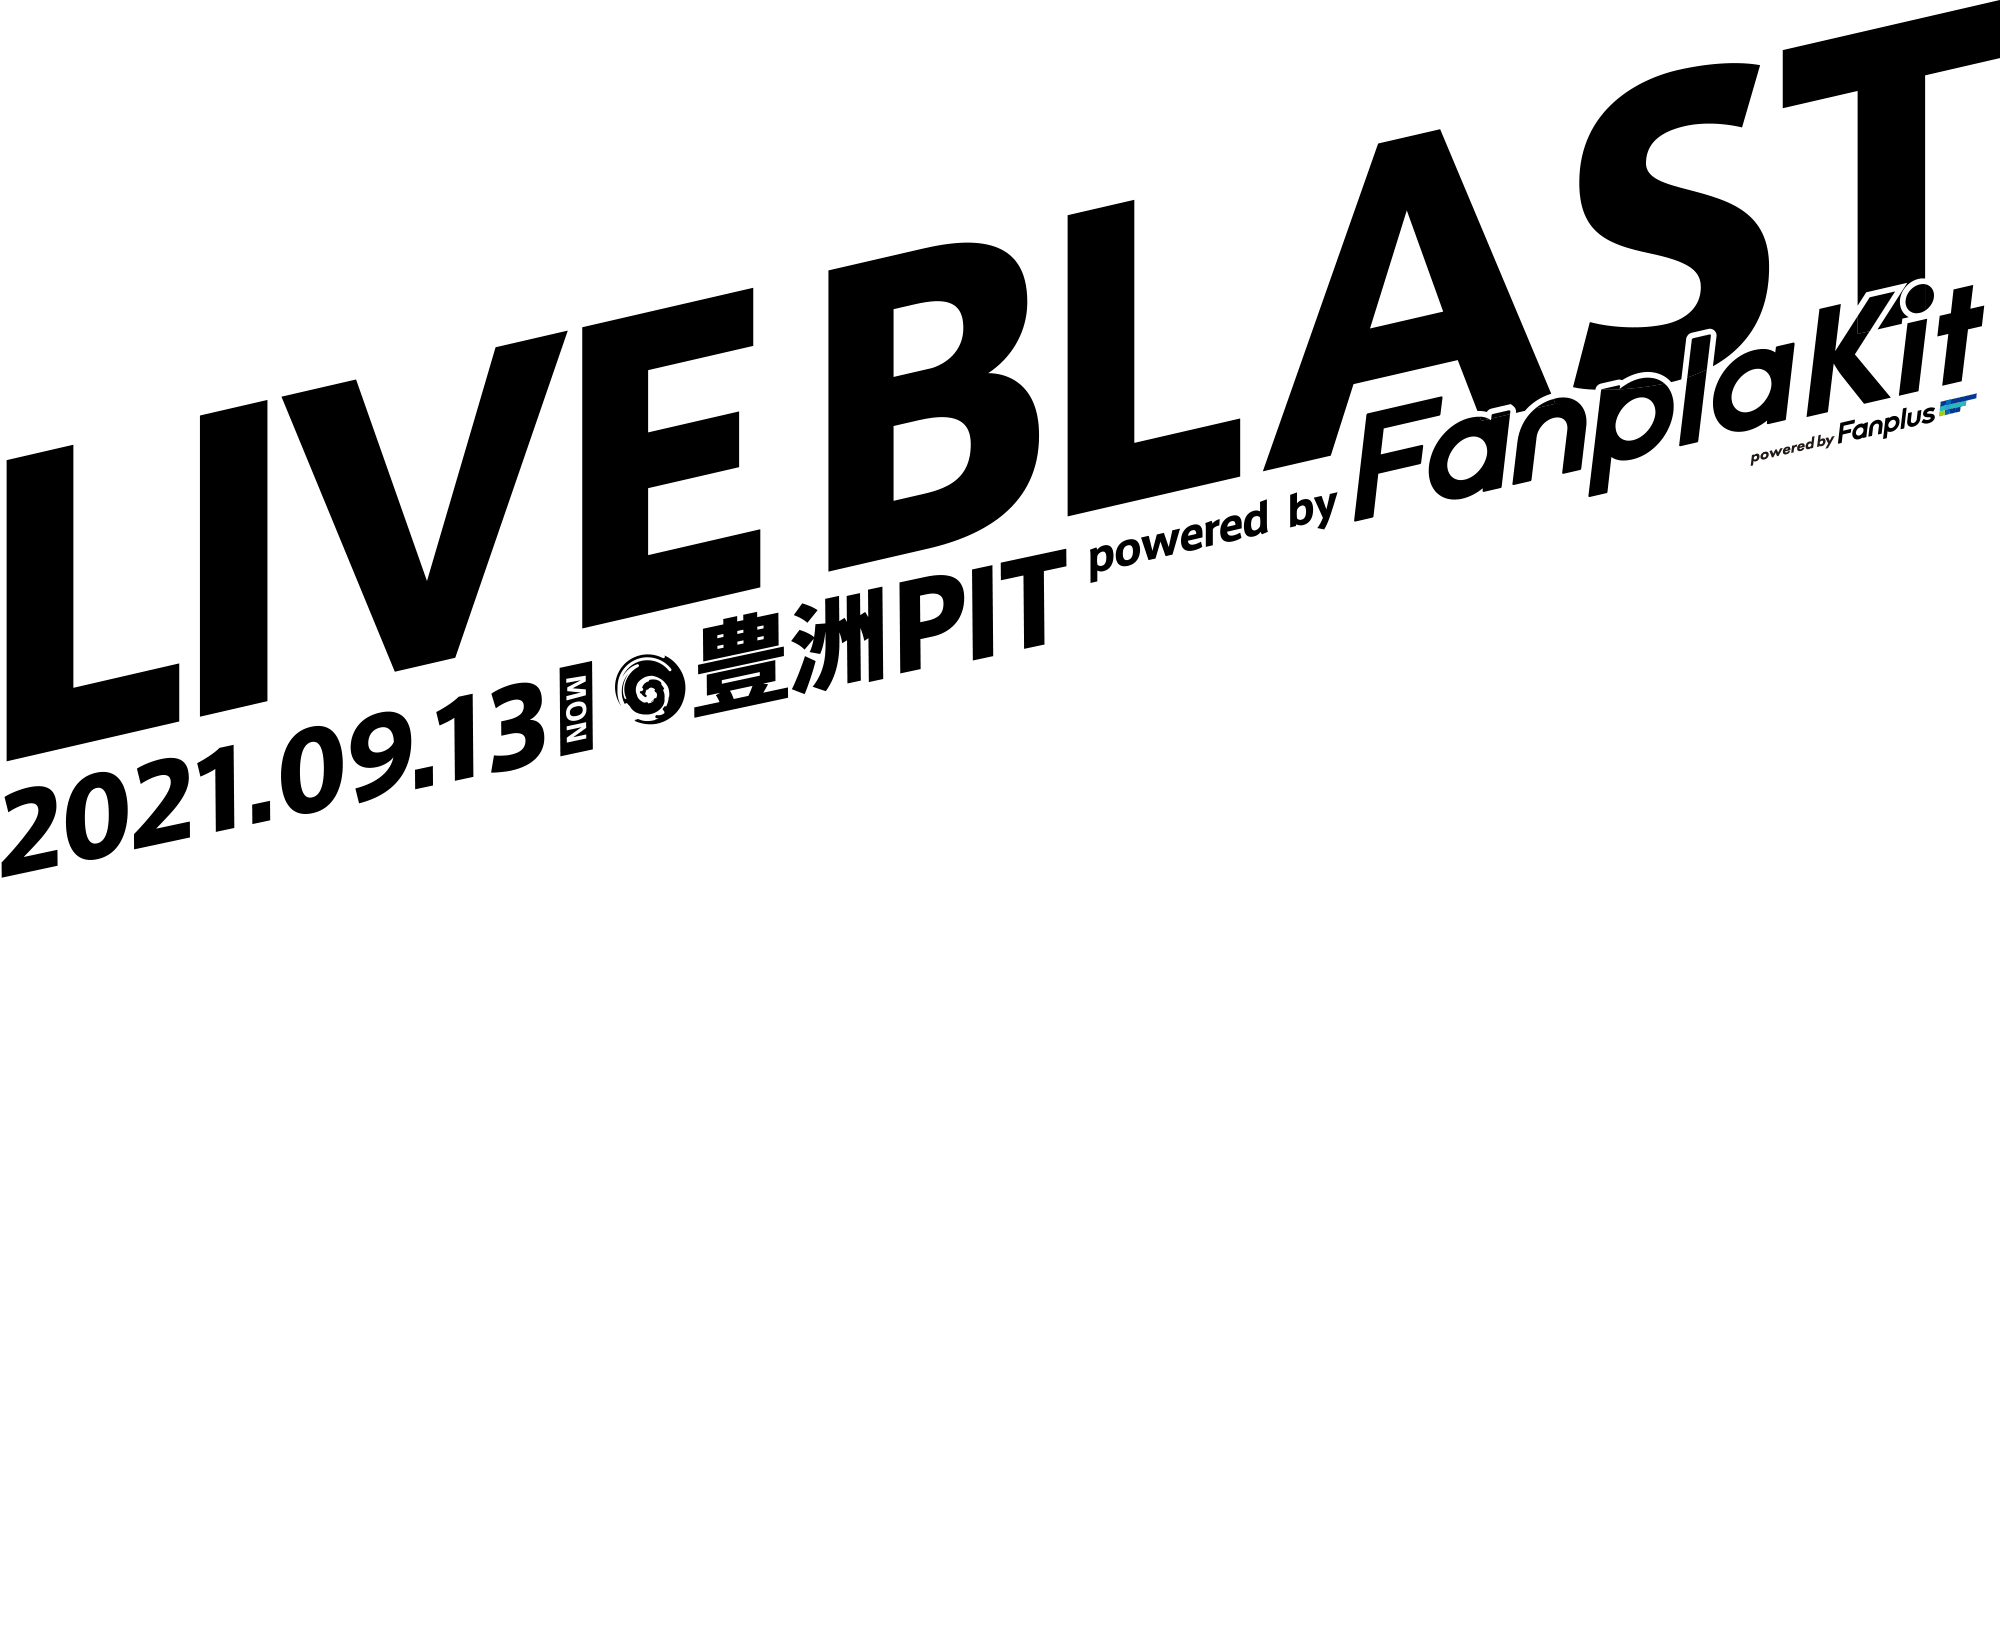 LIVE BLAST powered by Fanpla Kit 2021.09.13 MON @豊洲PIT